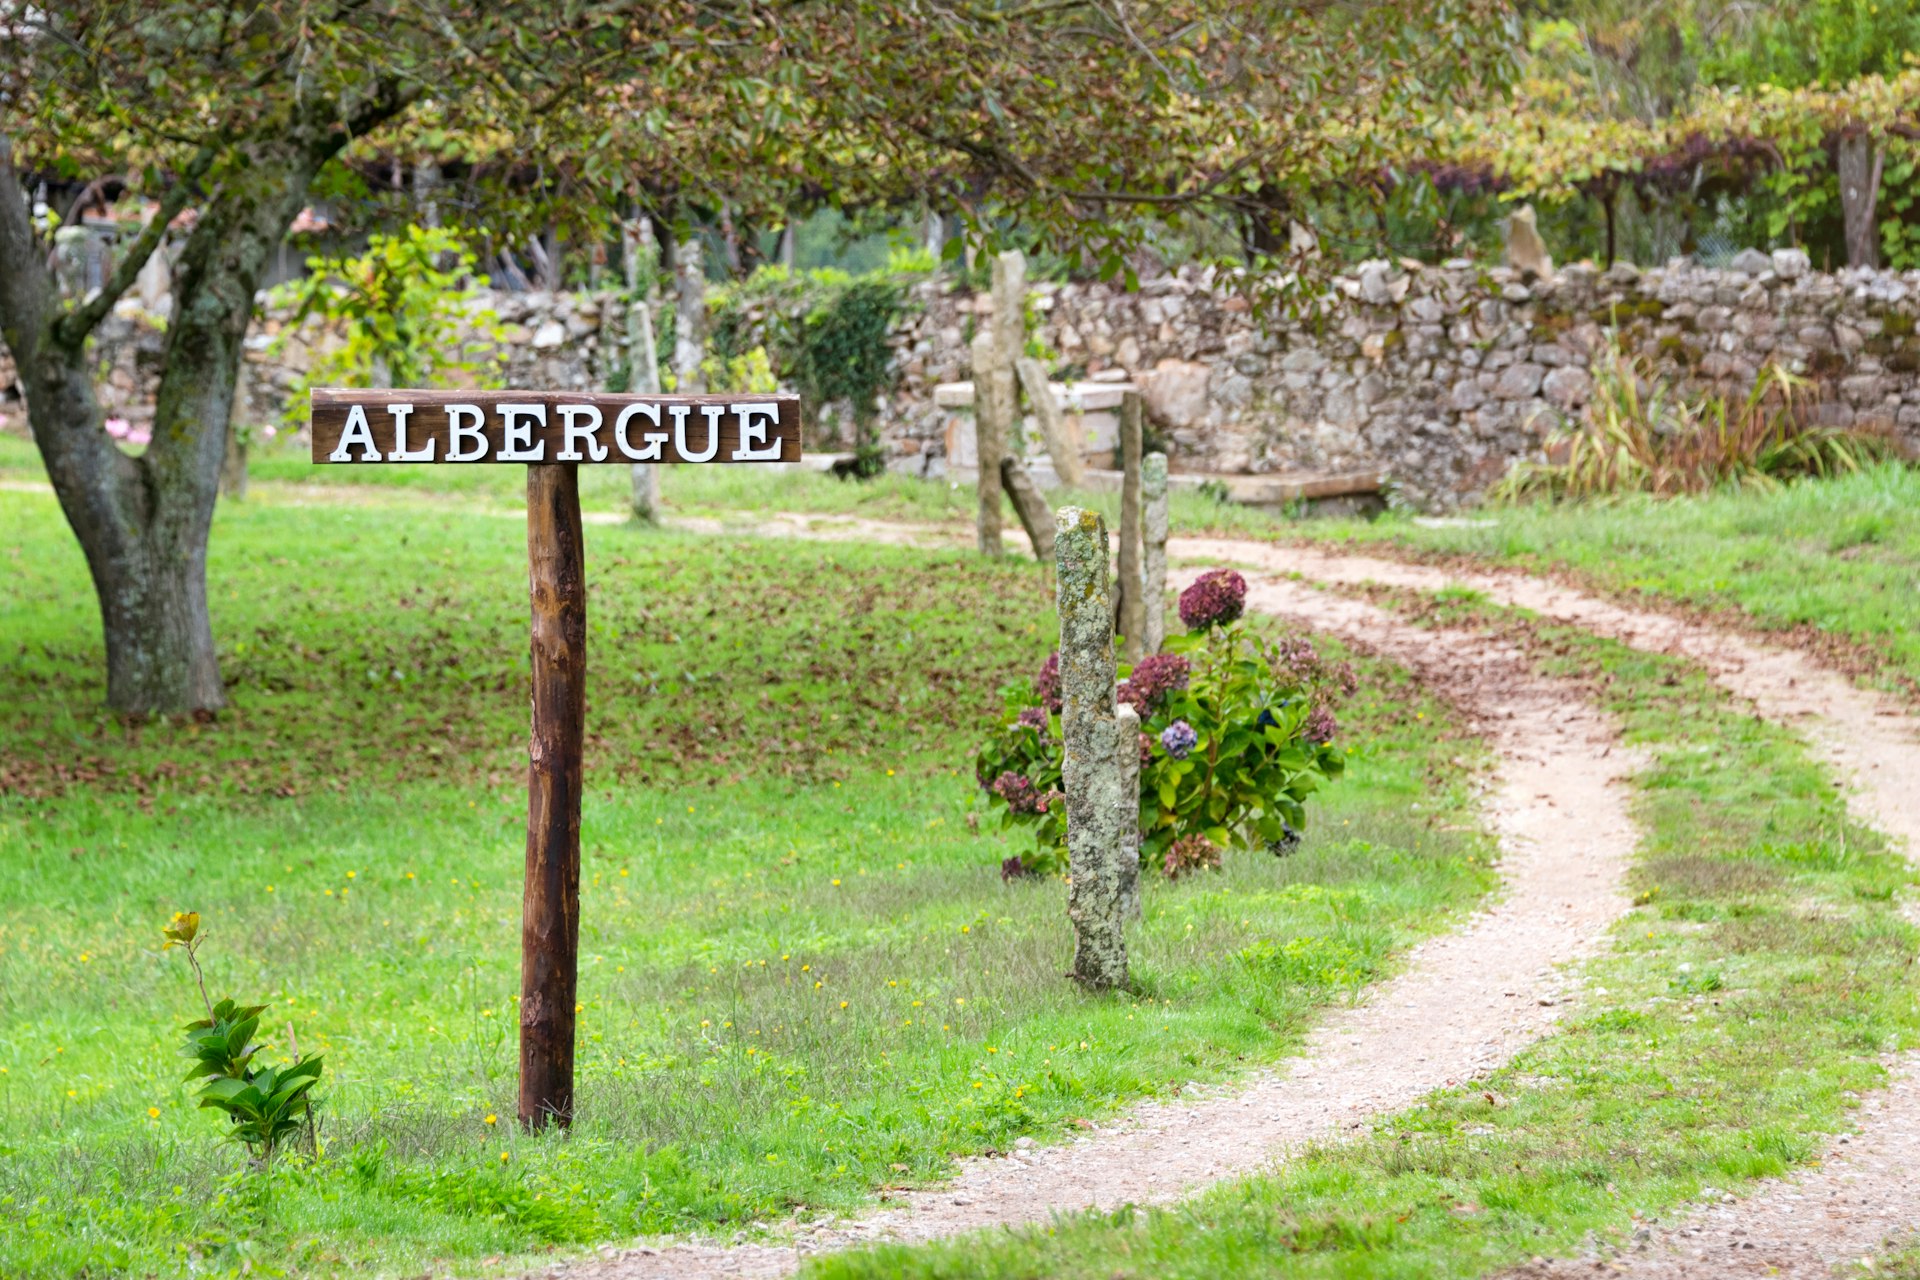 Albergue (hostel) signboard in a garden for pilgrims on the Way of St James, Camino de Santiago, Spain